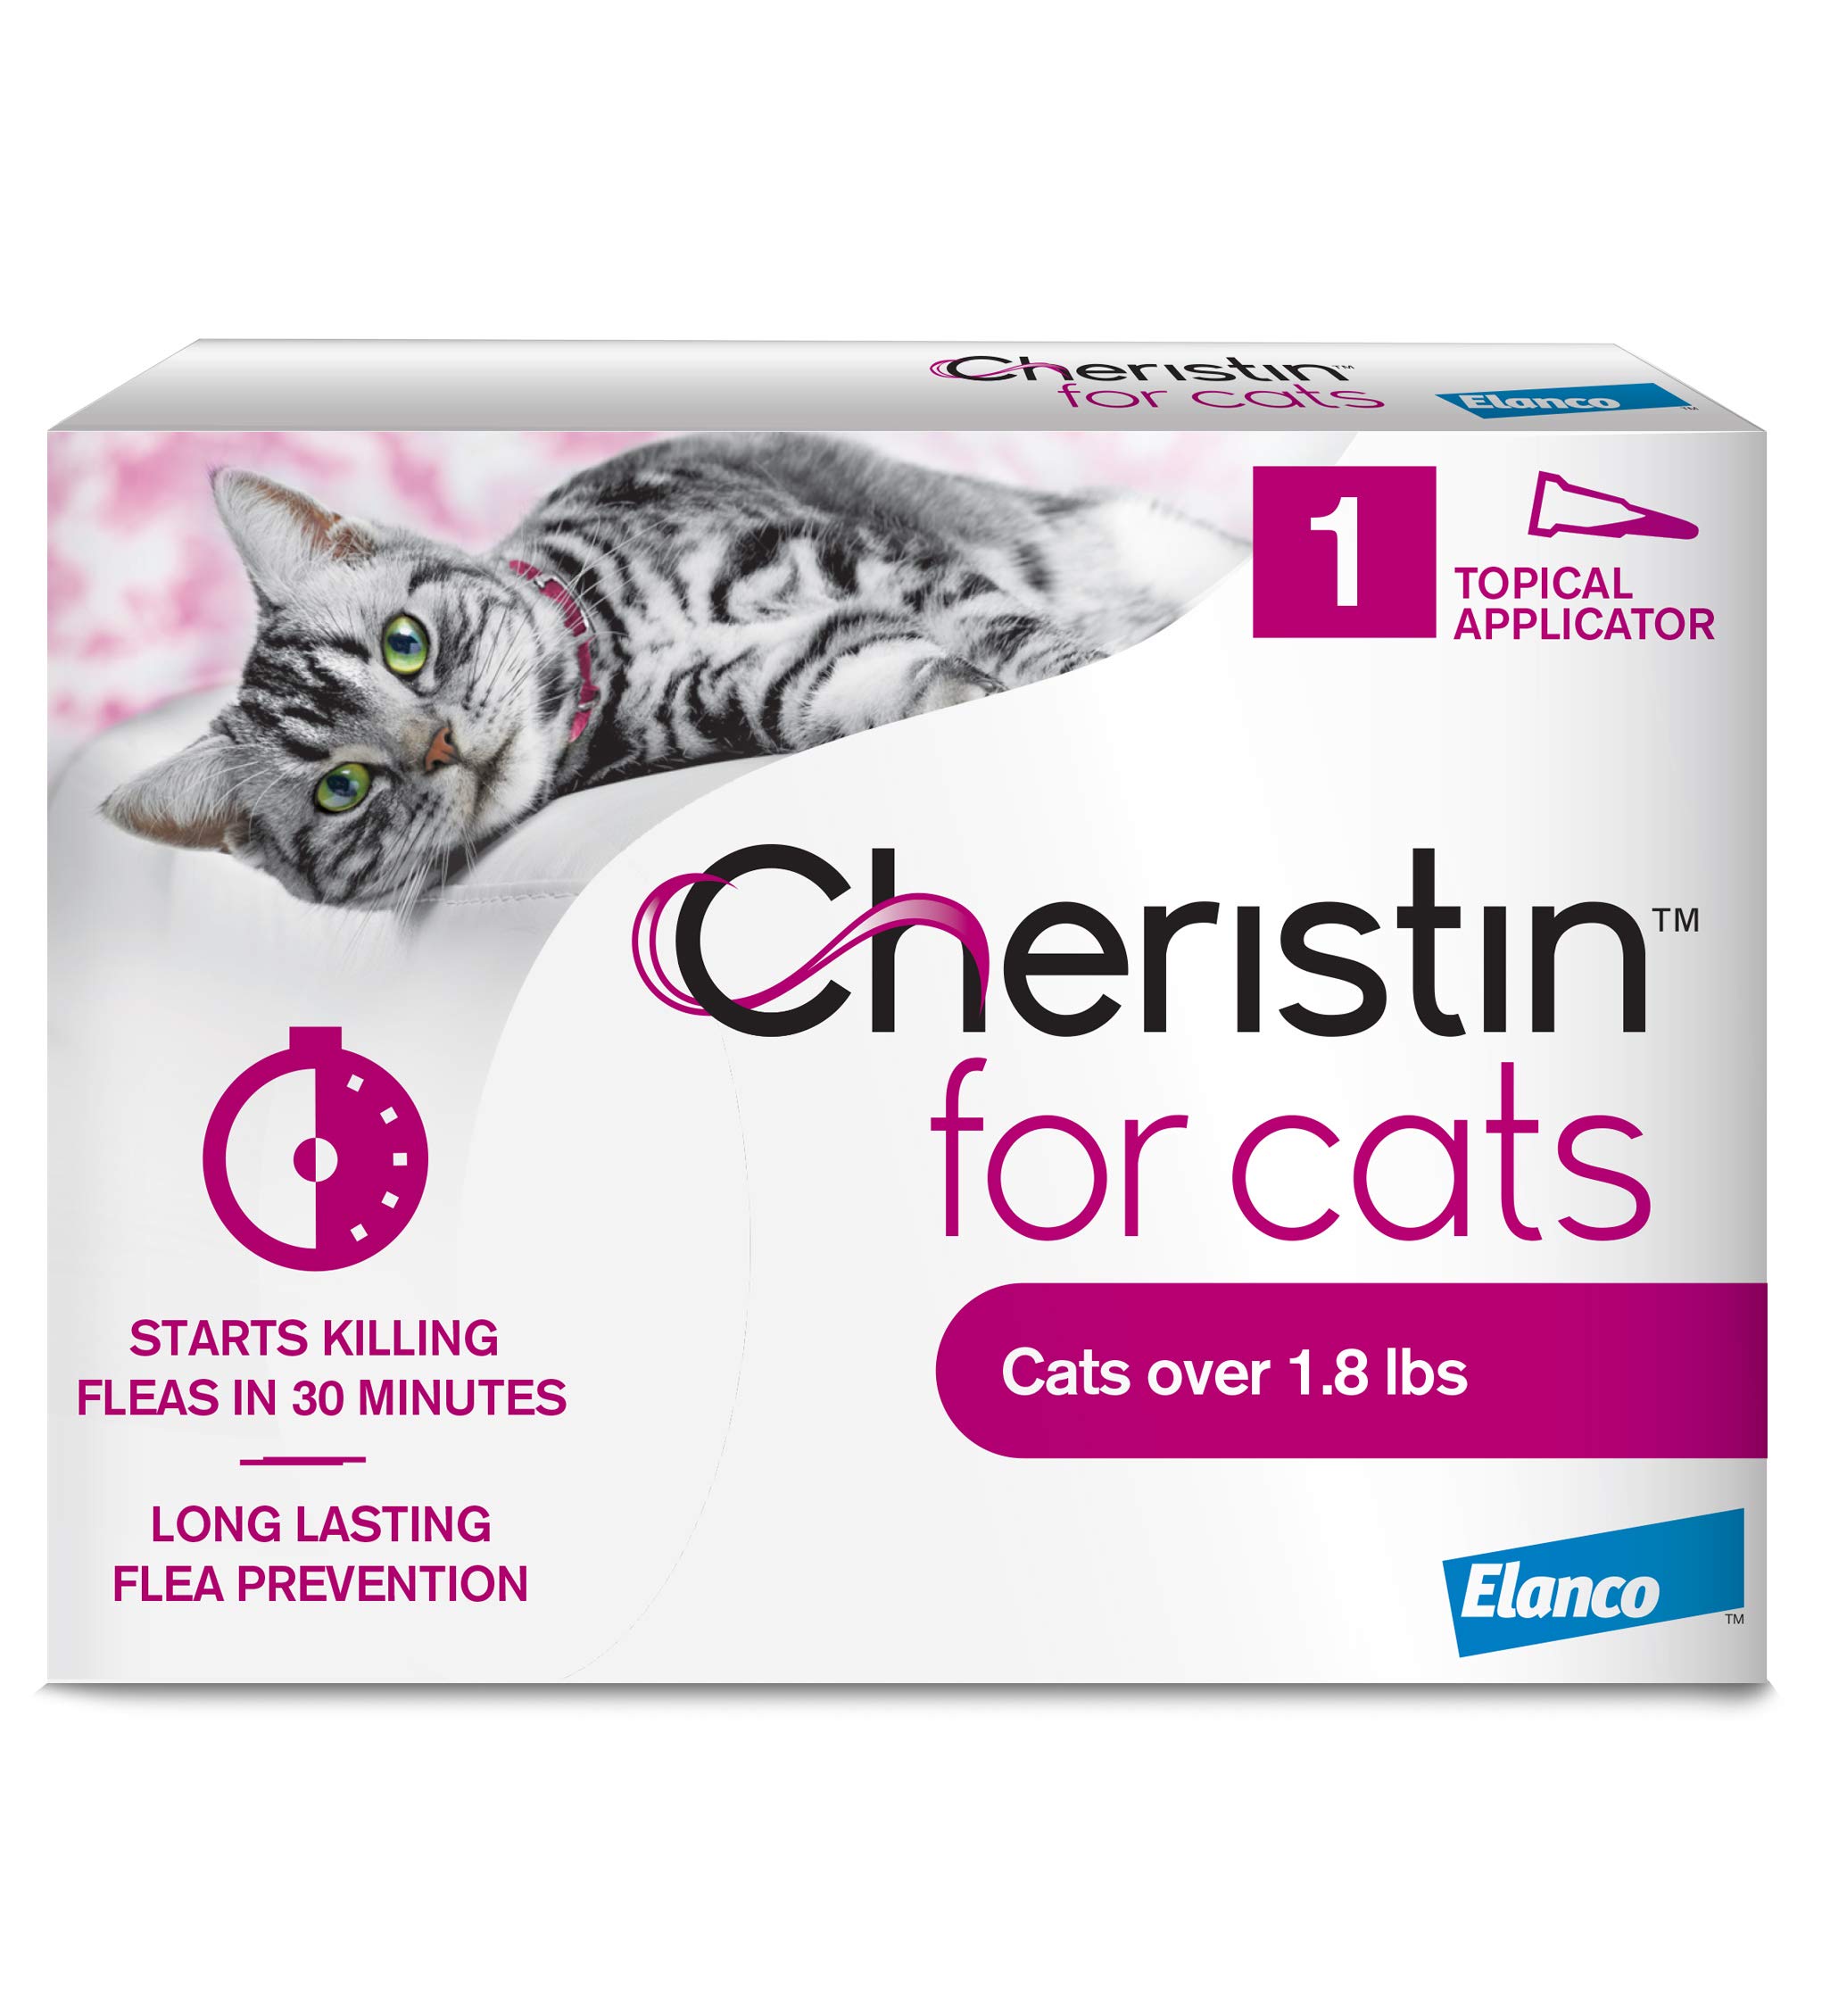 Cheristin 猫用局所ノミ治療薬は6週間効果が持続